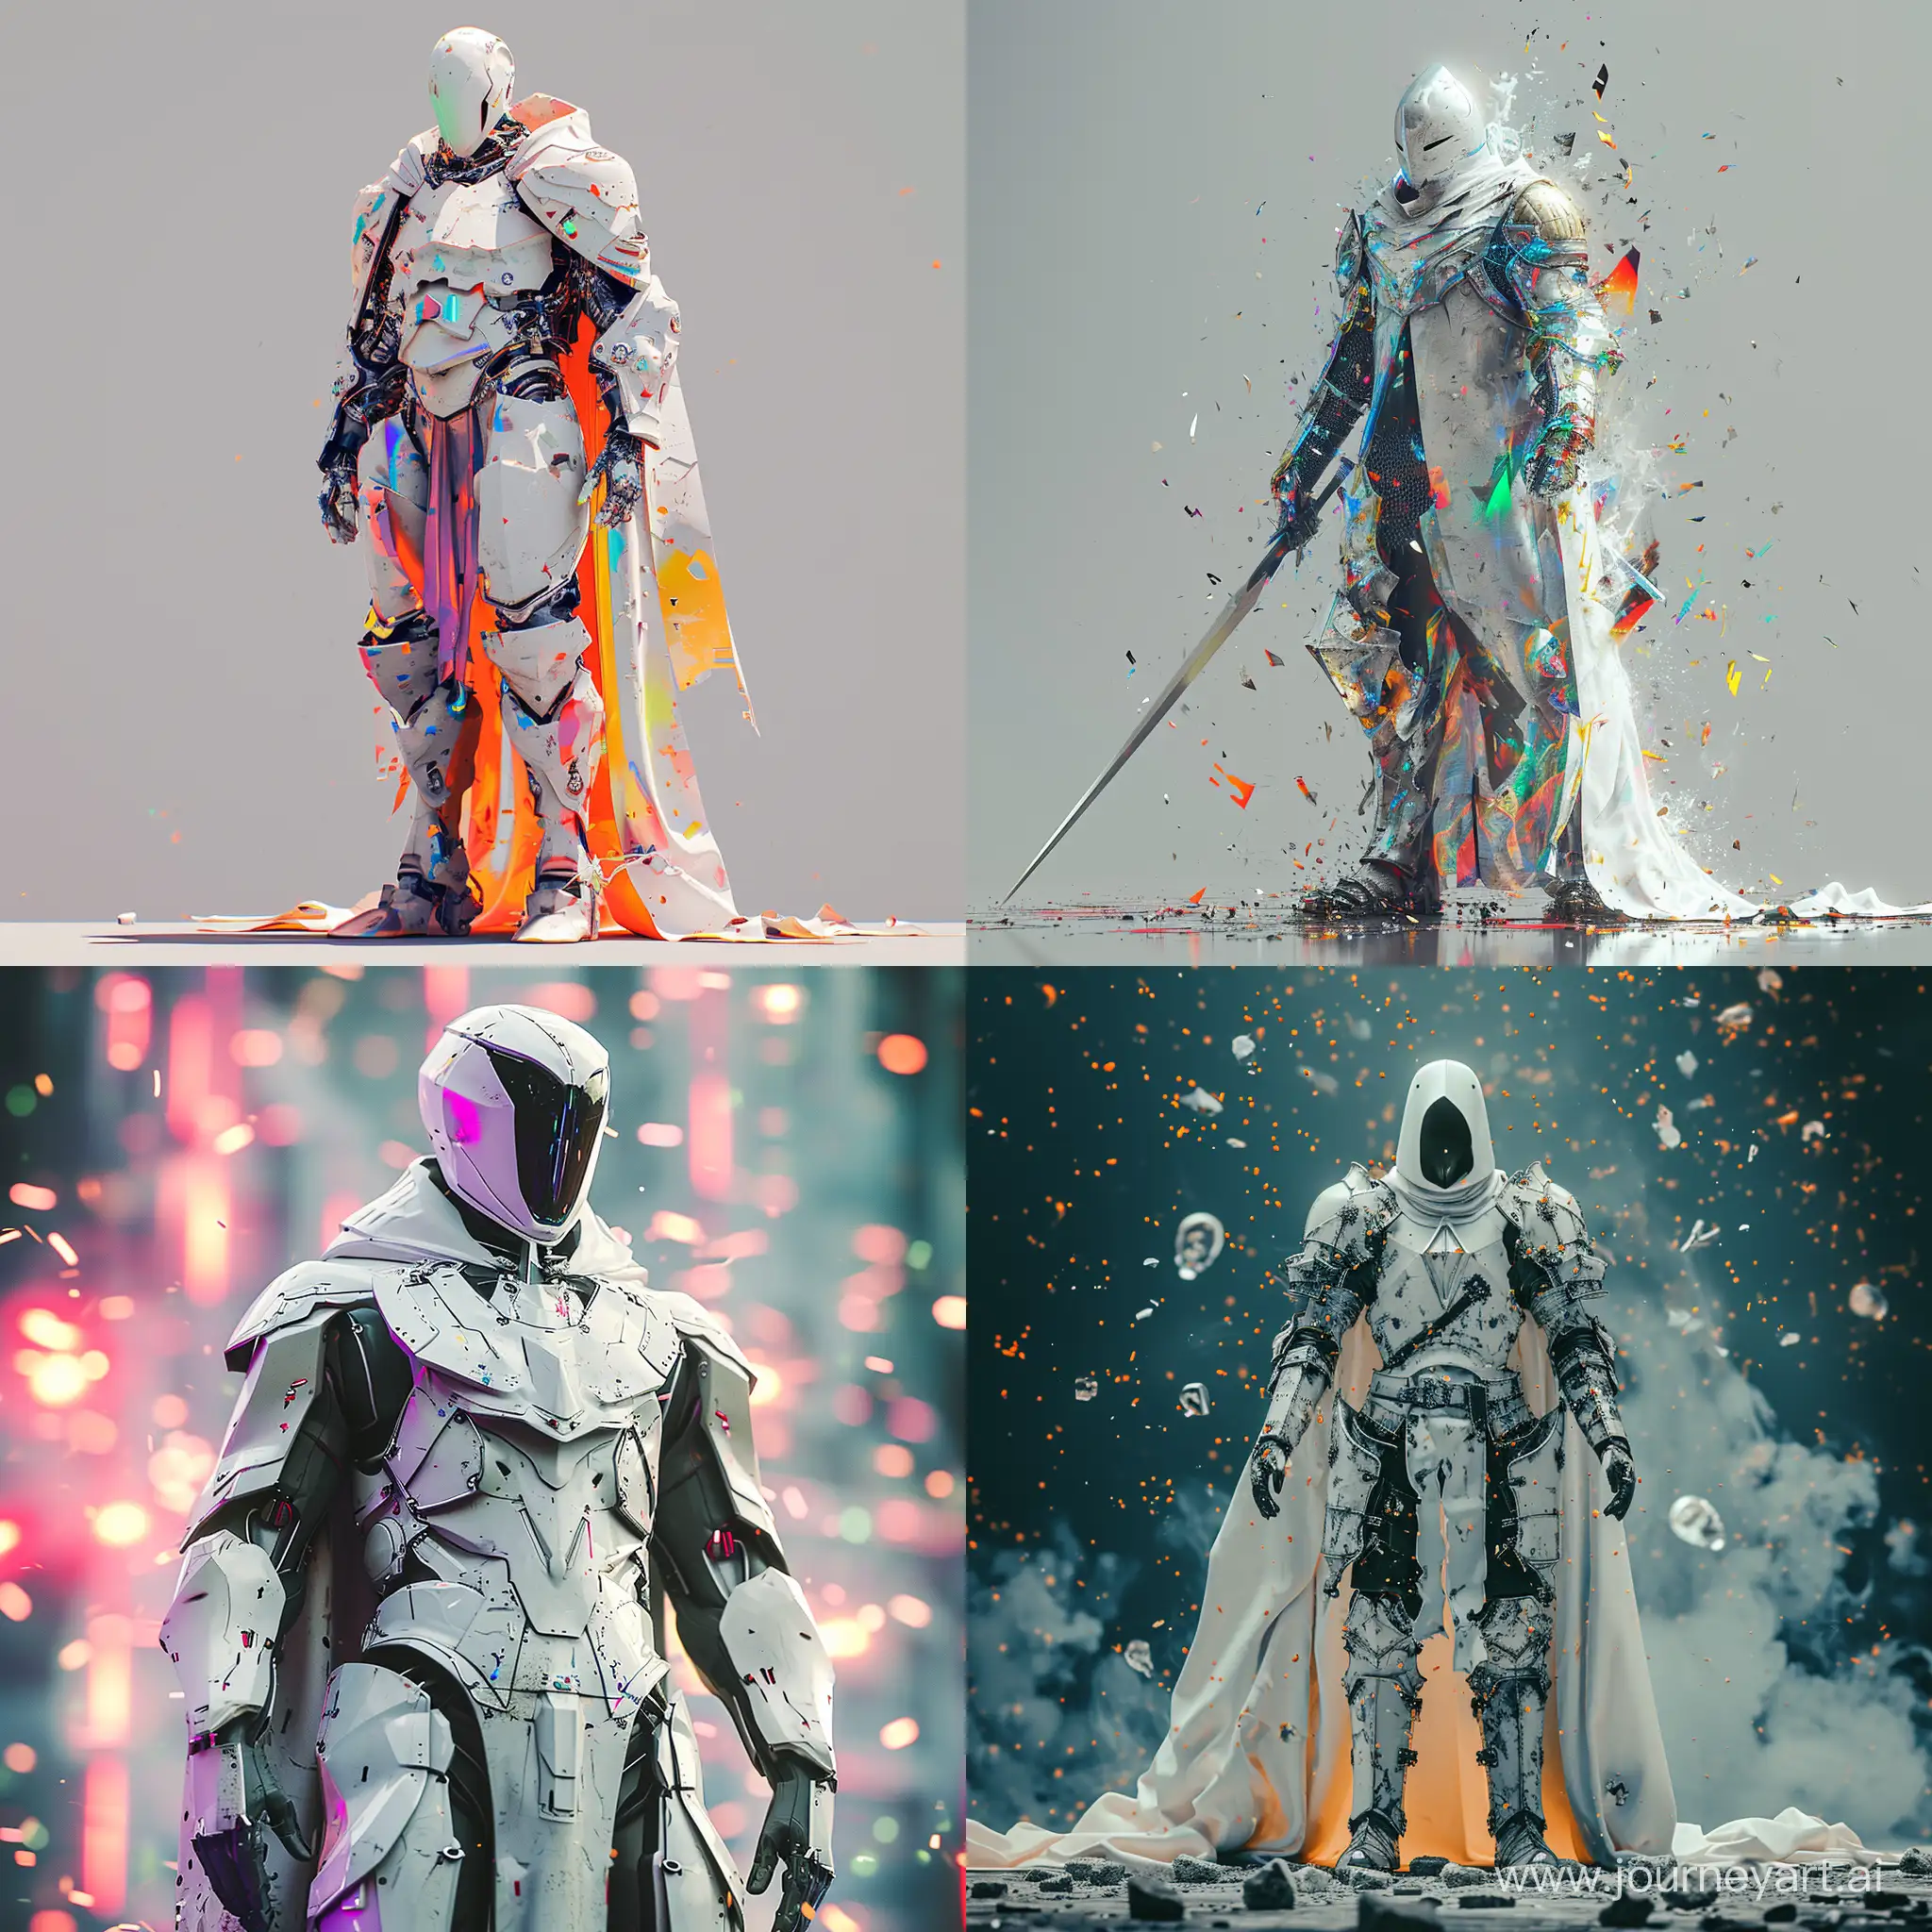 Colorful-Cyberpunk-White-Knight-in-Fantasy-Armor